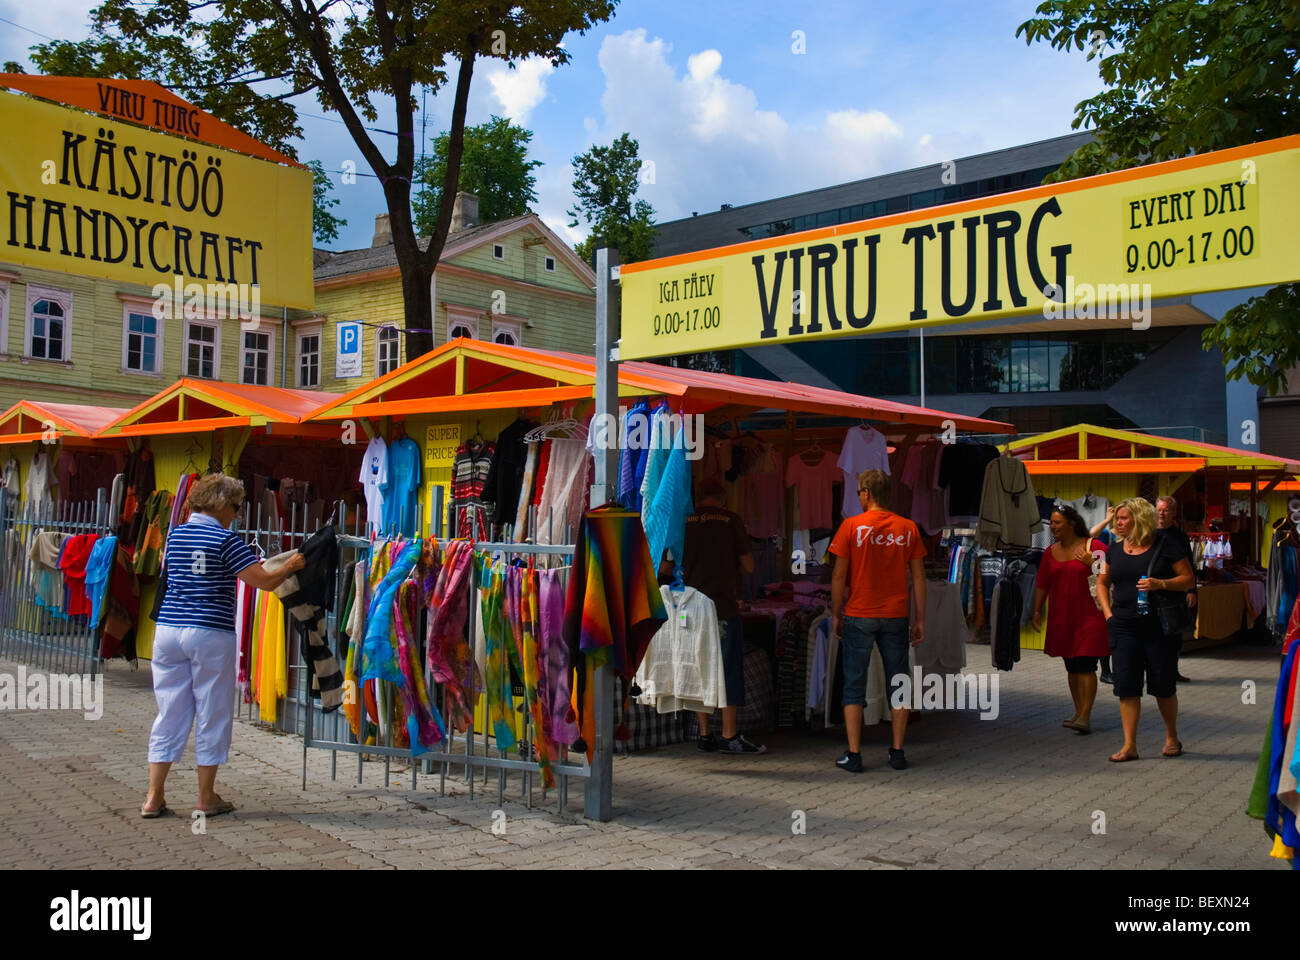 Viru Turg handicraft market along Mere pst street in central Tallinn Estonia Europe Stock Photo